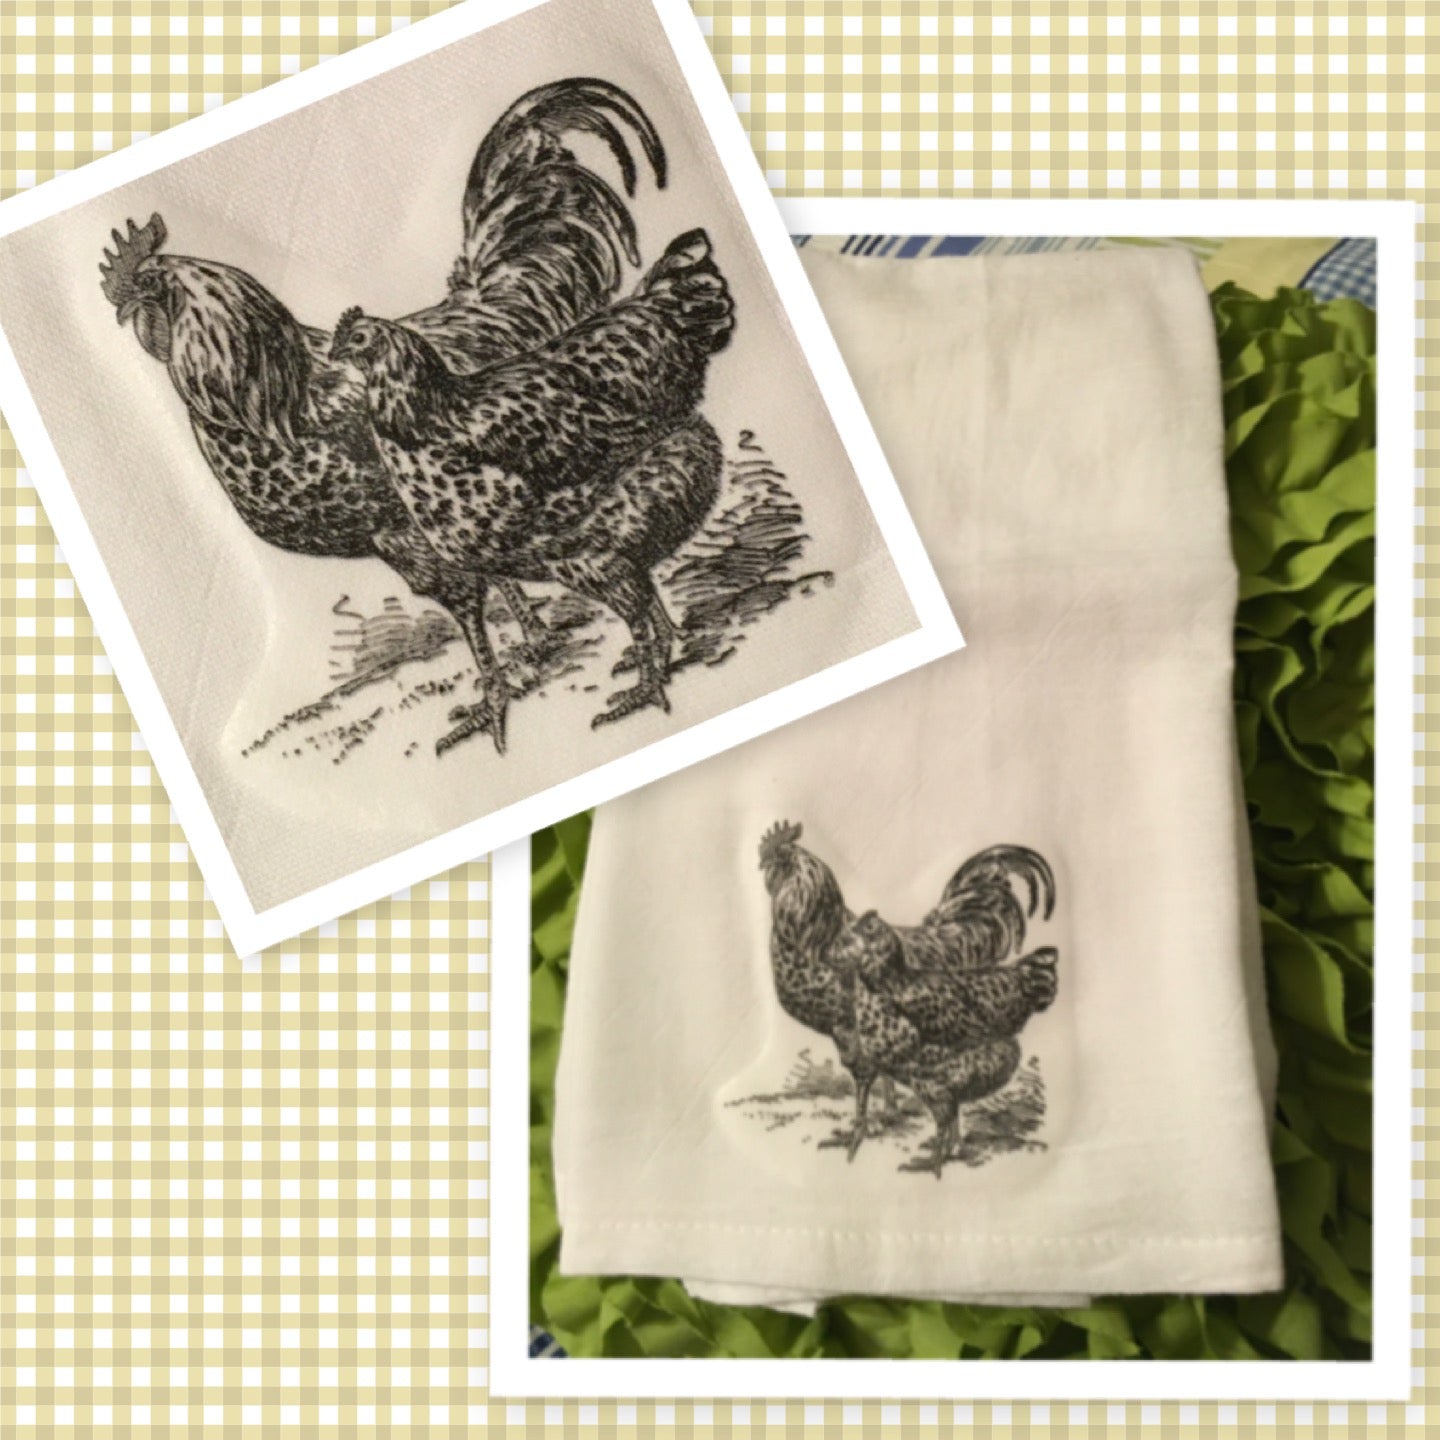 5 CHICKENS Flour Sack Decorative Tea Dish Towels Gift Kitchen Country –  JAMsCraftCloset